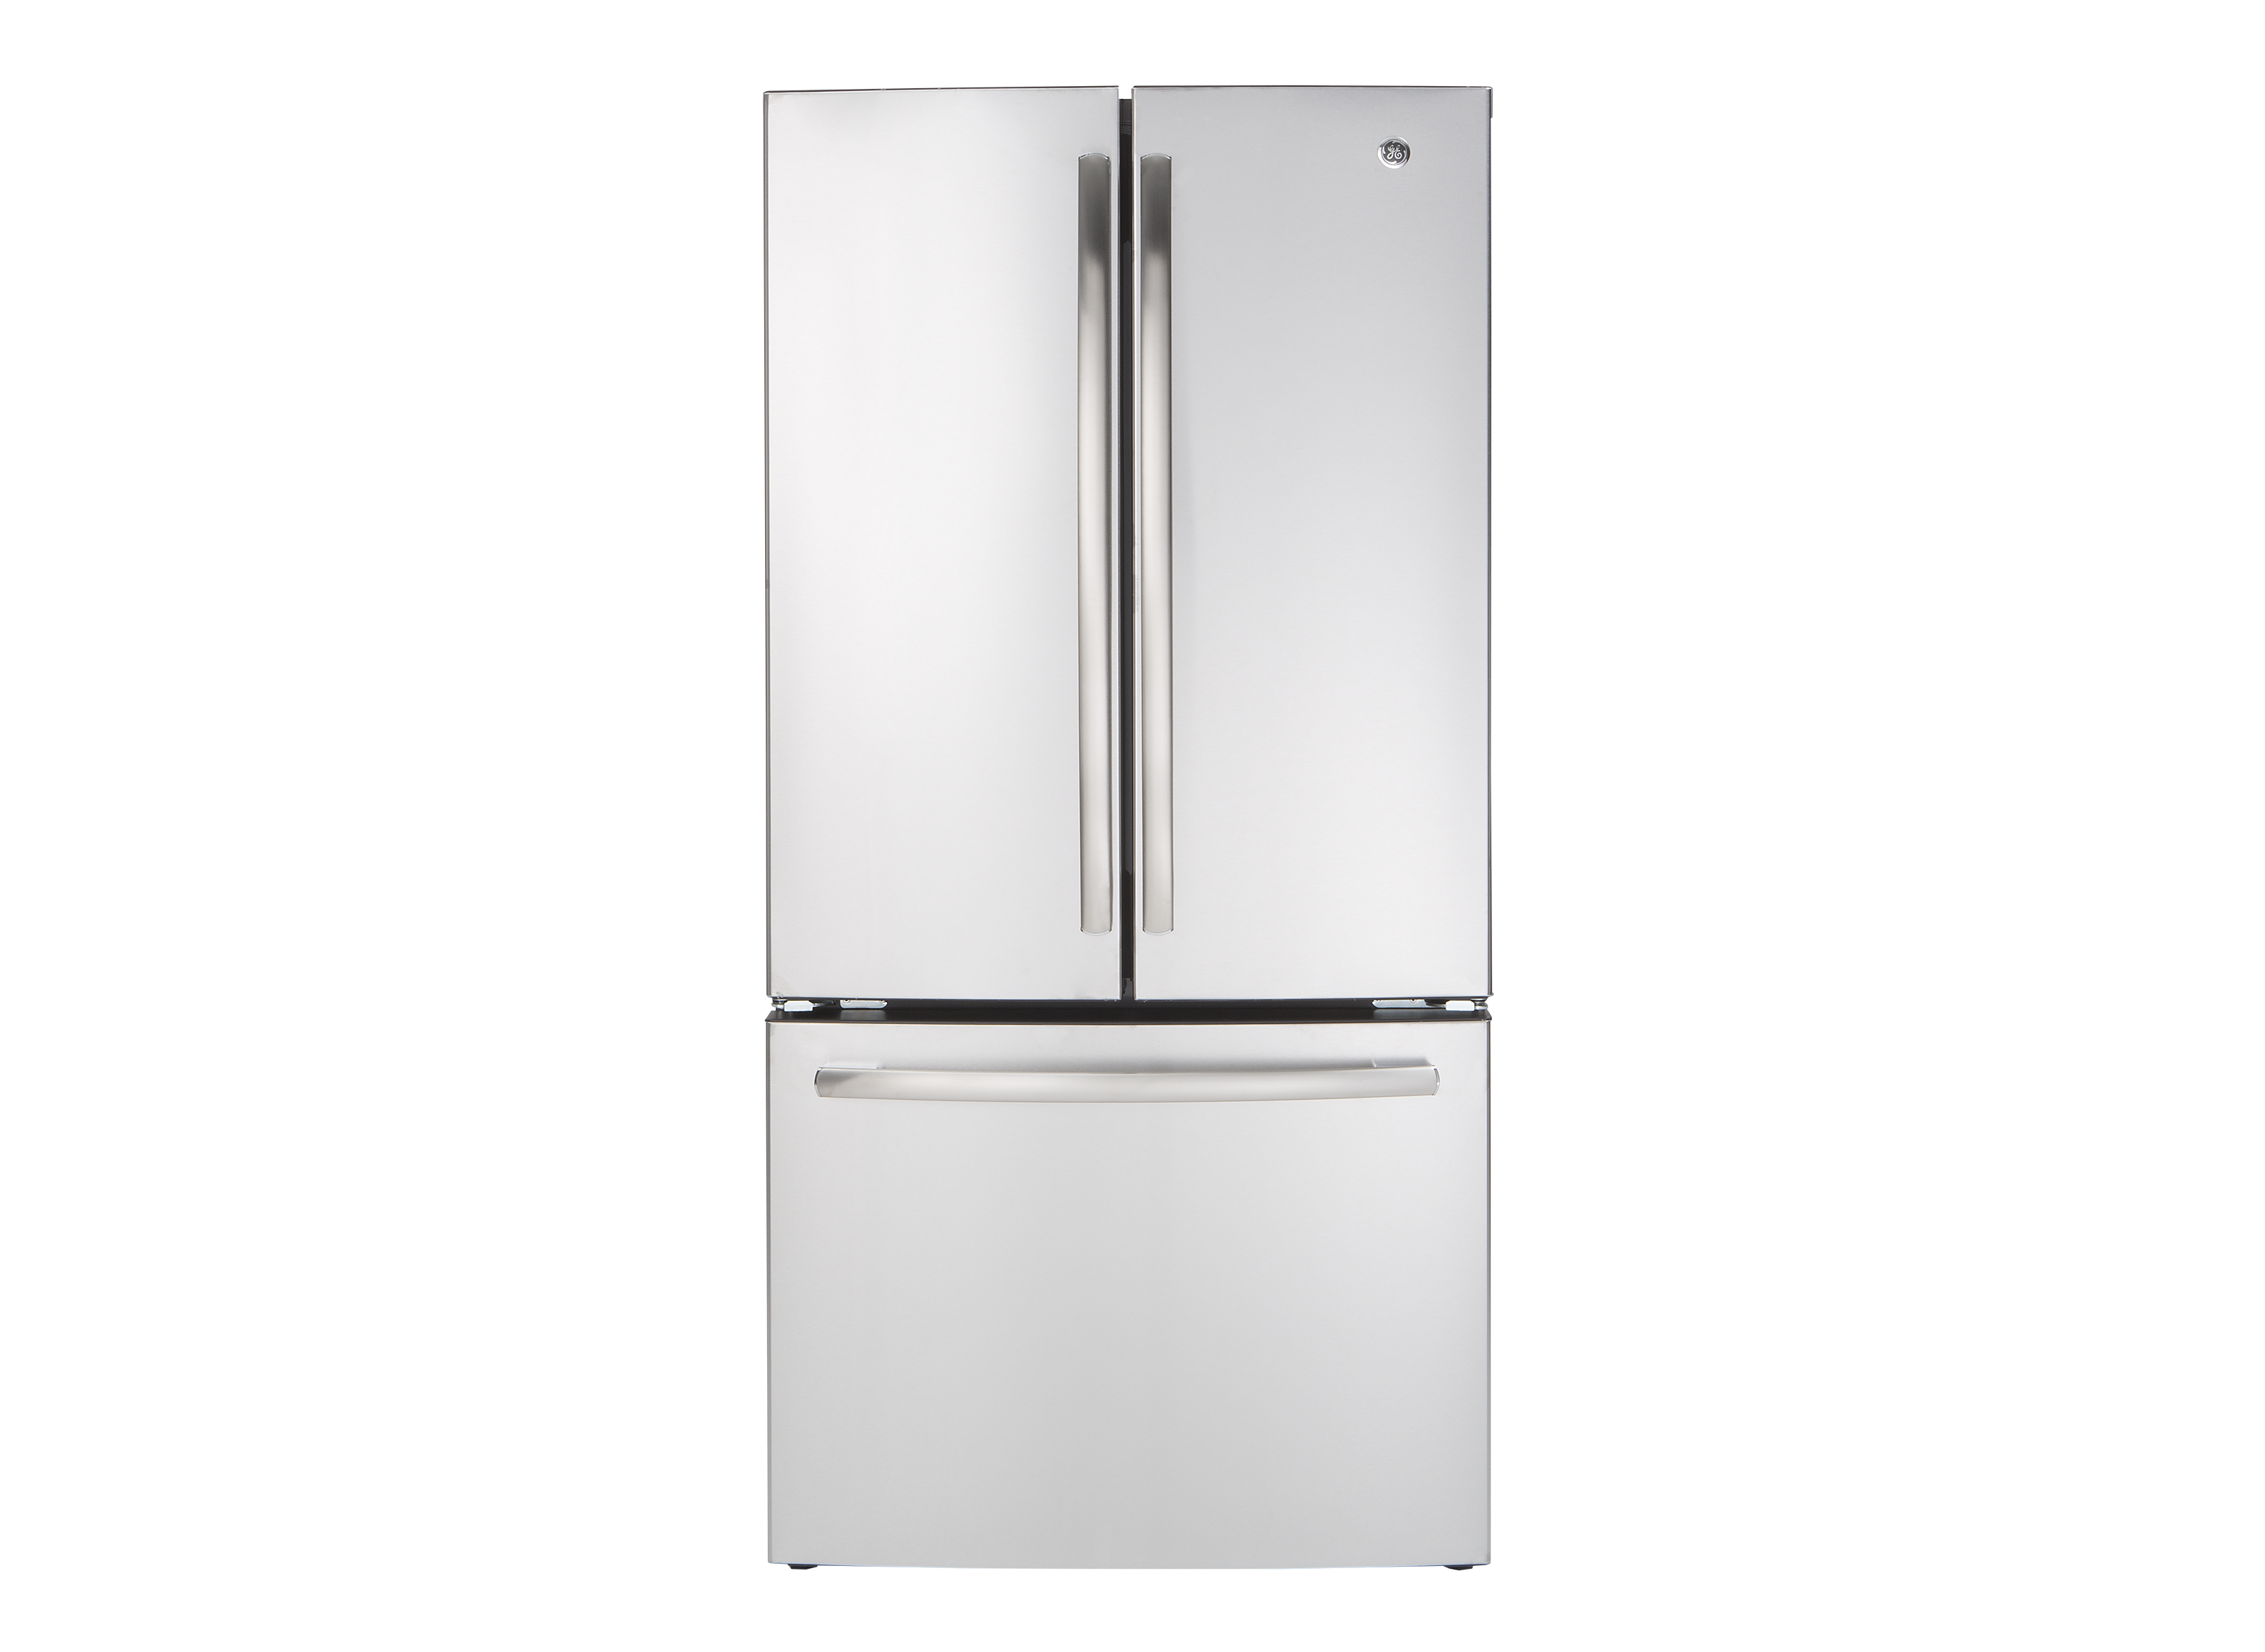 GE Appliances recalls refrigerators with freezer handles that can